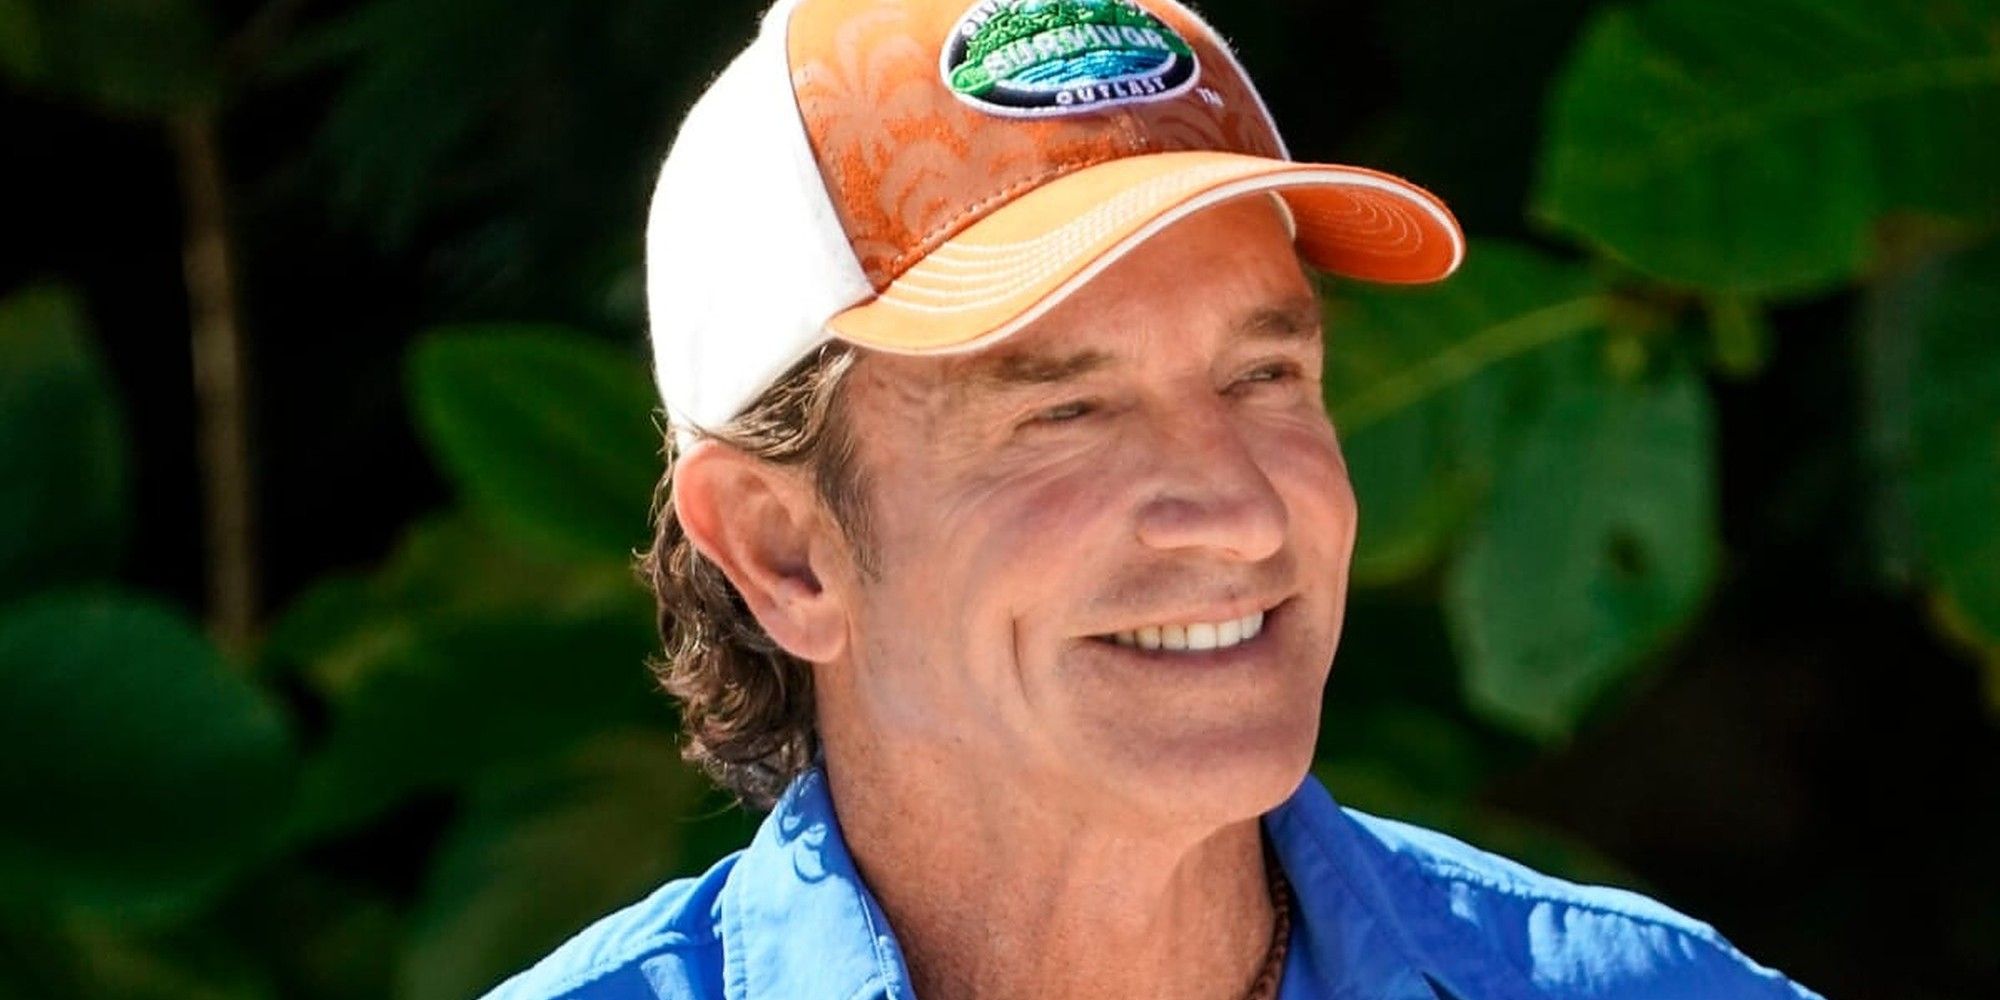 Jeff Probst on Survivor 44 smiling in orange hat with series logo